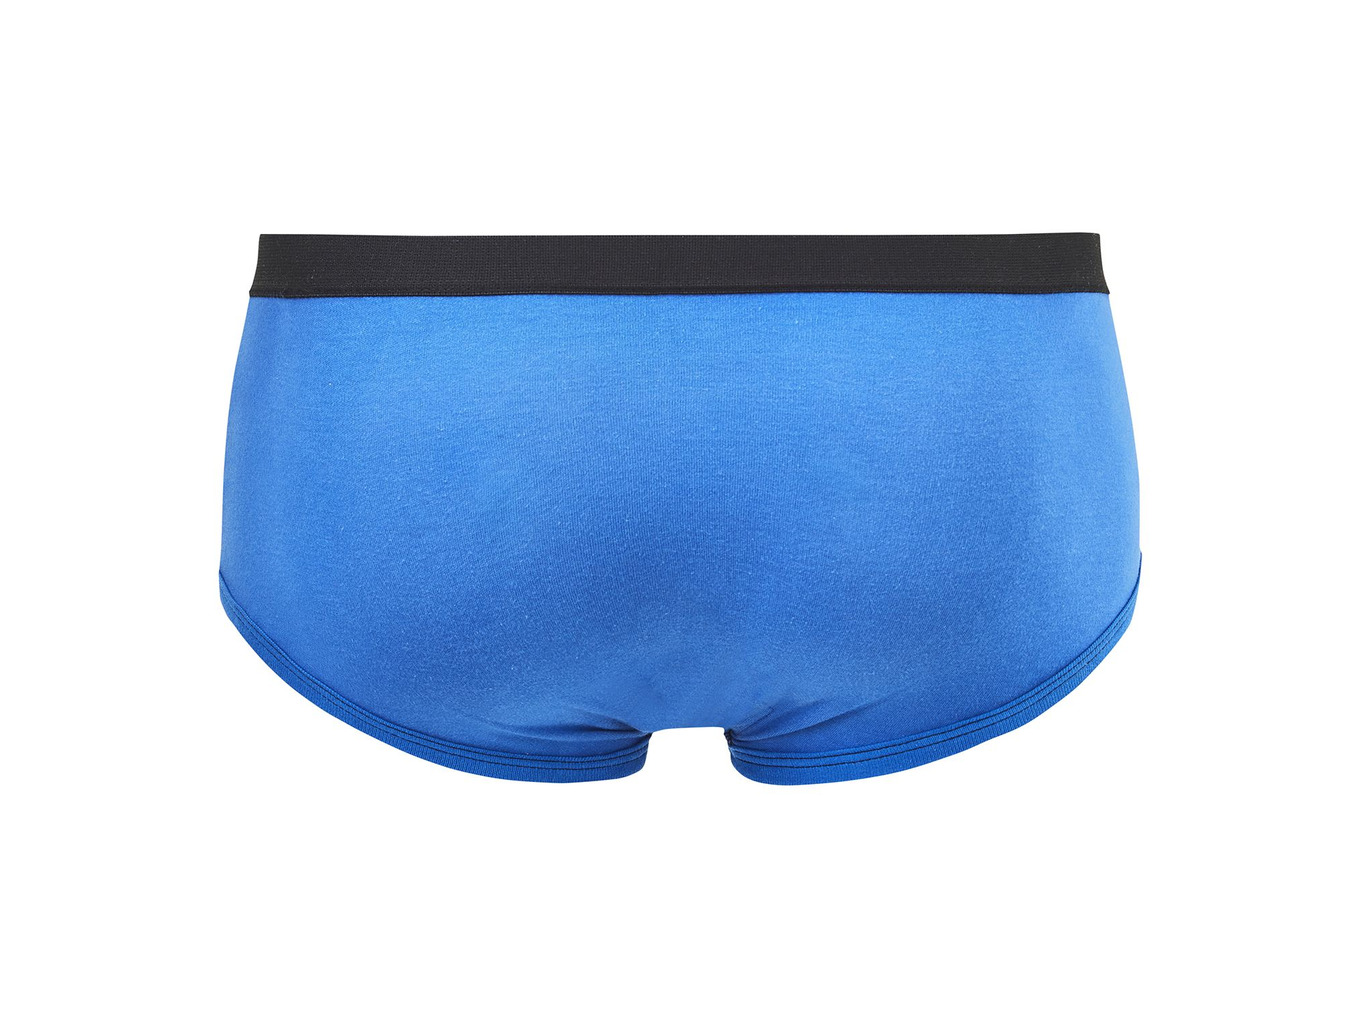 Male Washable Incontinence Pants Blue | Supplies4Care Ltd